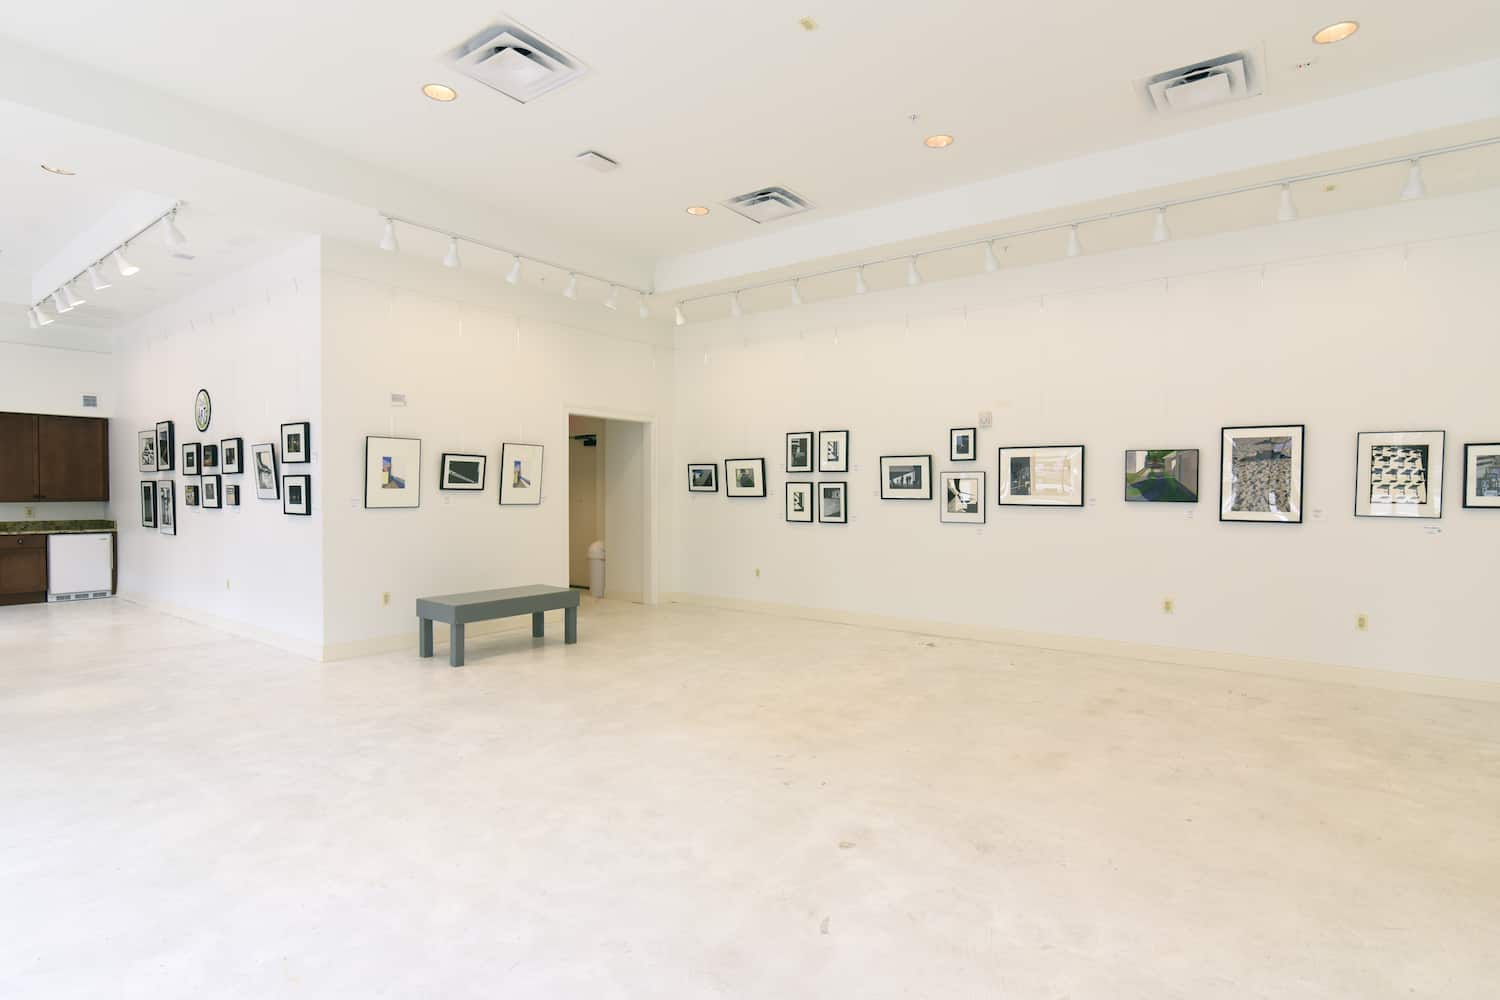 Falls Church Arts Gallery